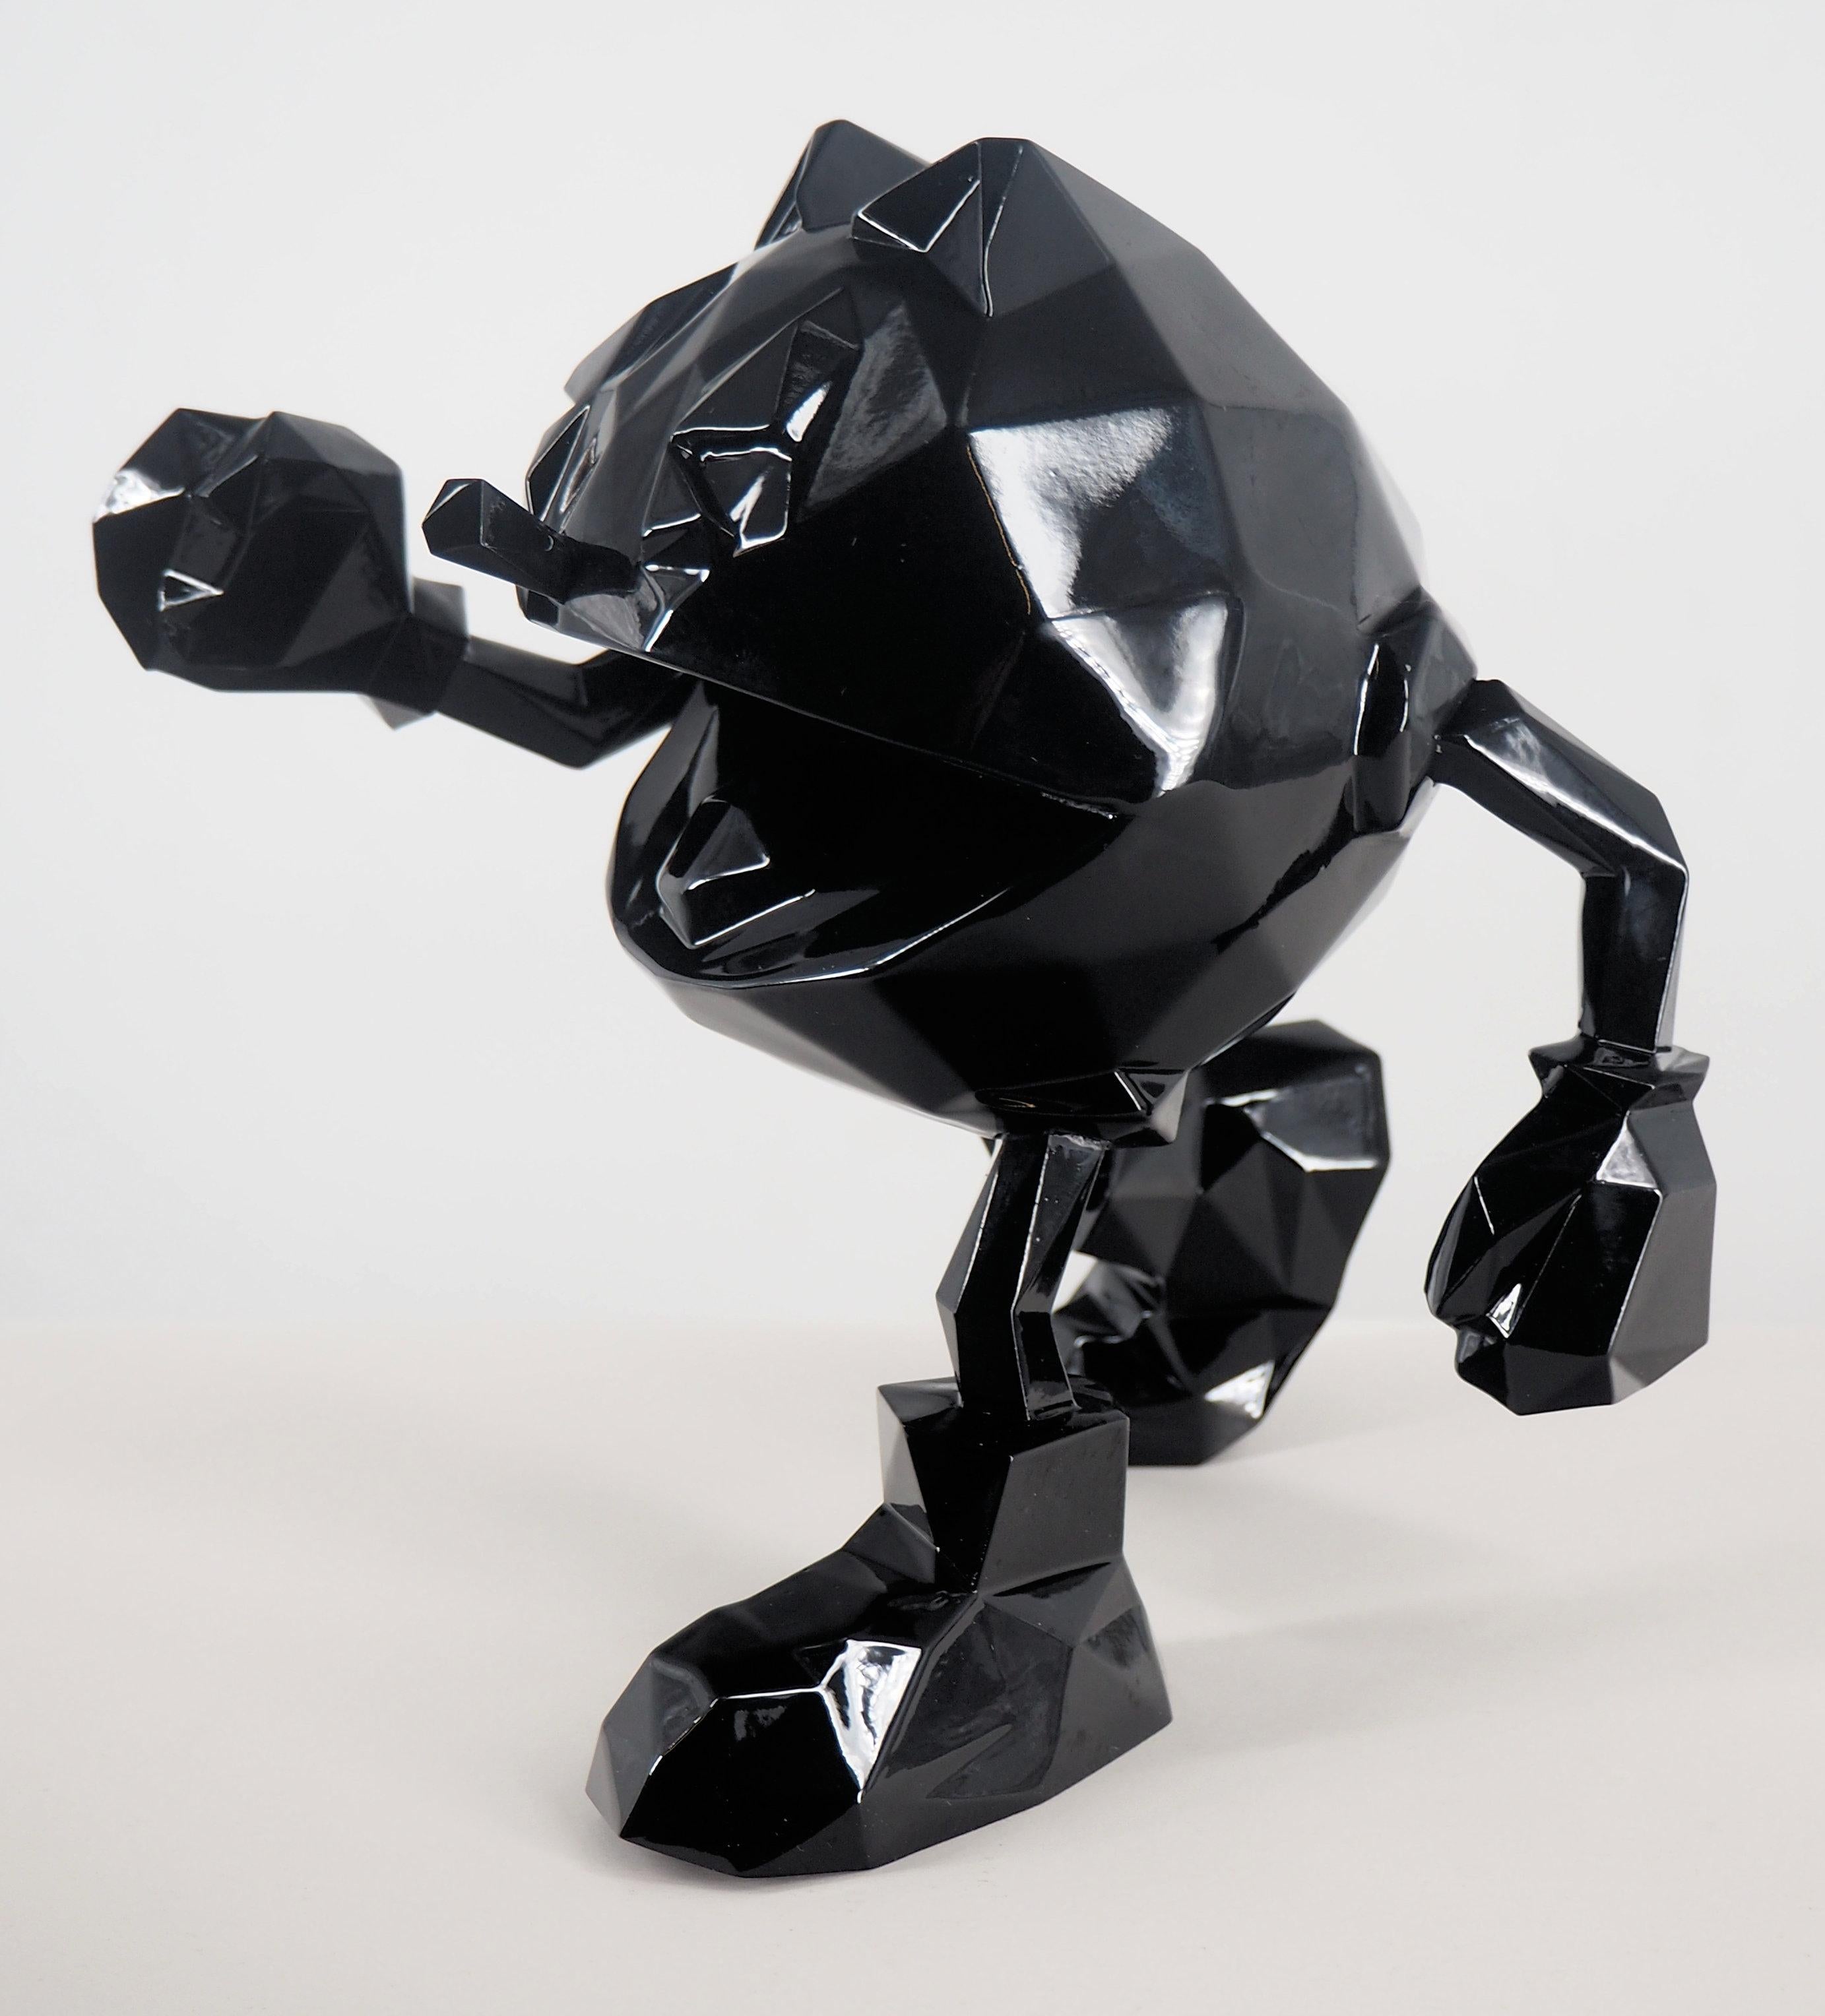 Richard ORLINSKI
Pac Man (Black edition)

Sculpture in resin
Metallic Black
About 18 cm (c. 7 in)
Presented in original box

Excellent condition